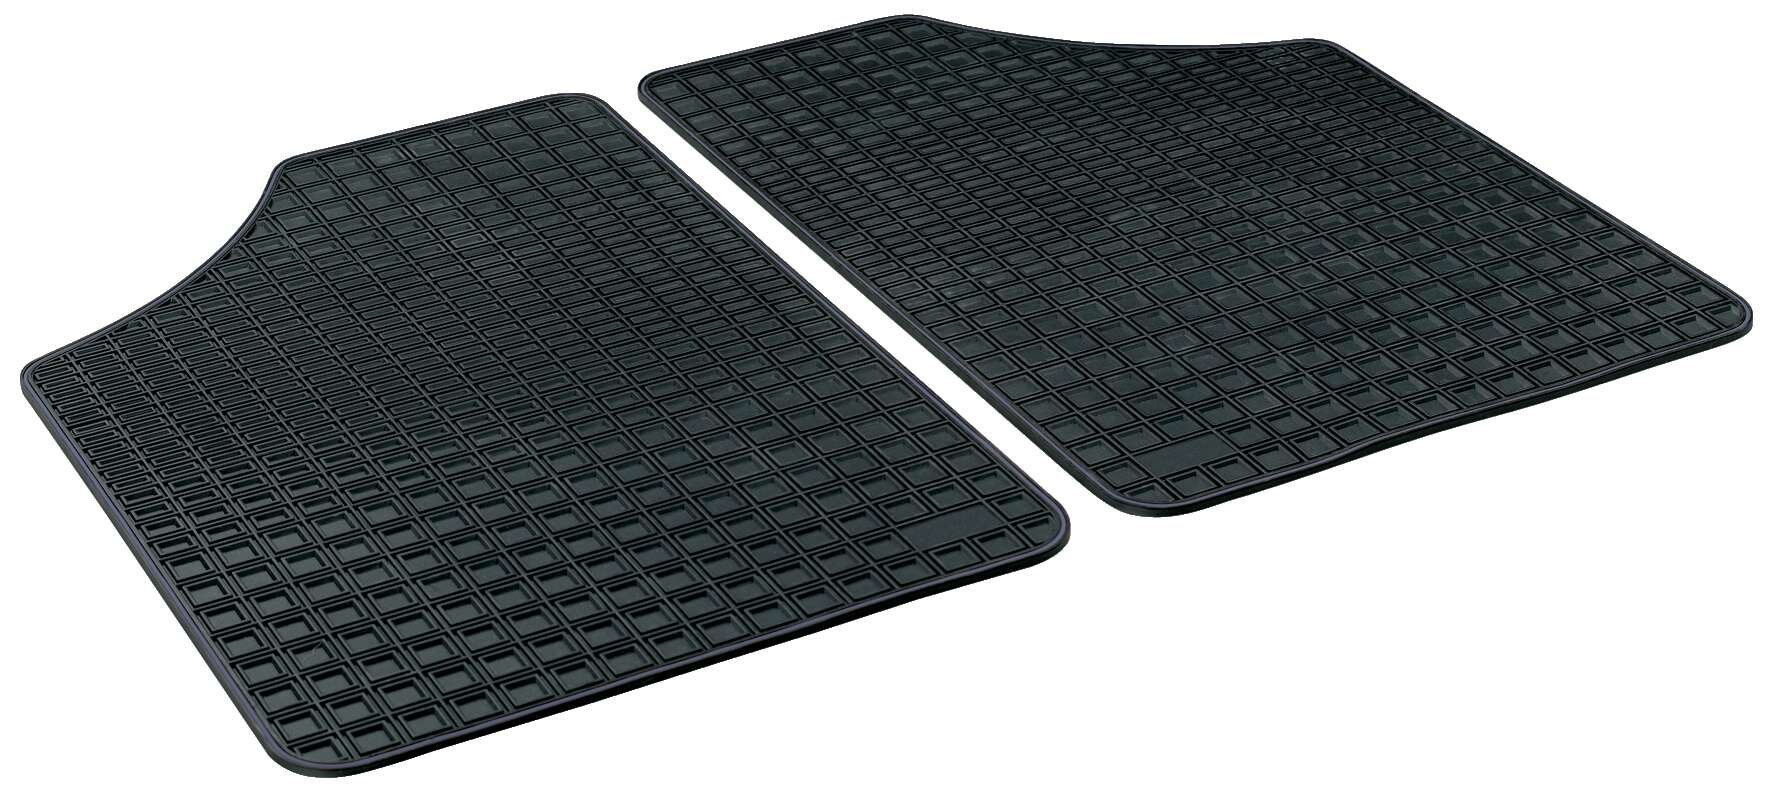 Rubber mats for Blueline Premium Gr. 1